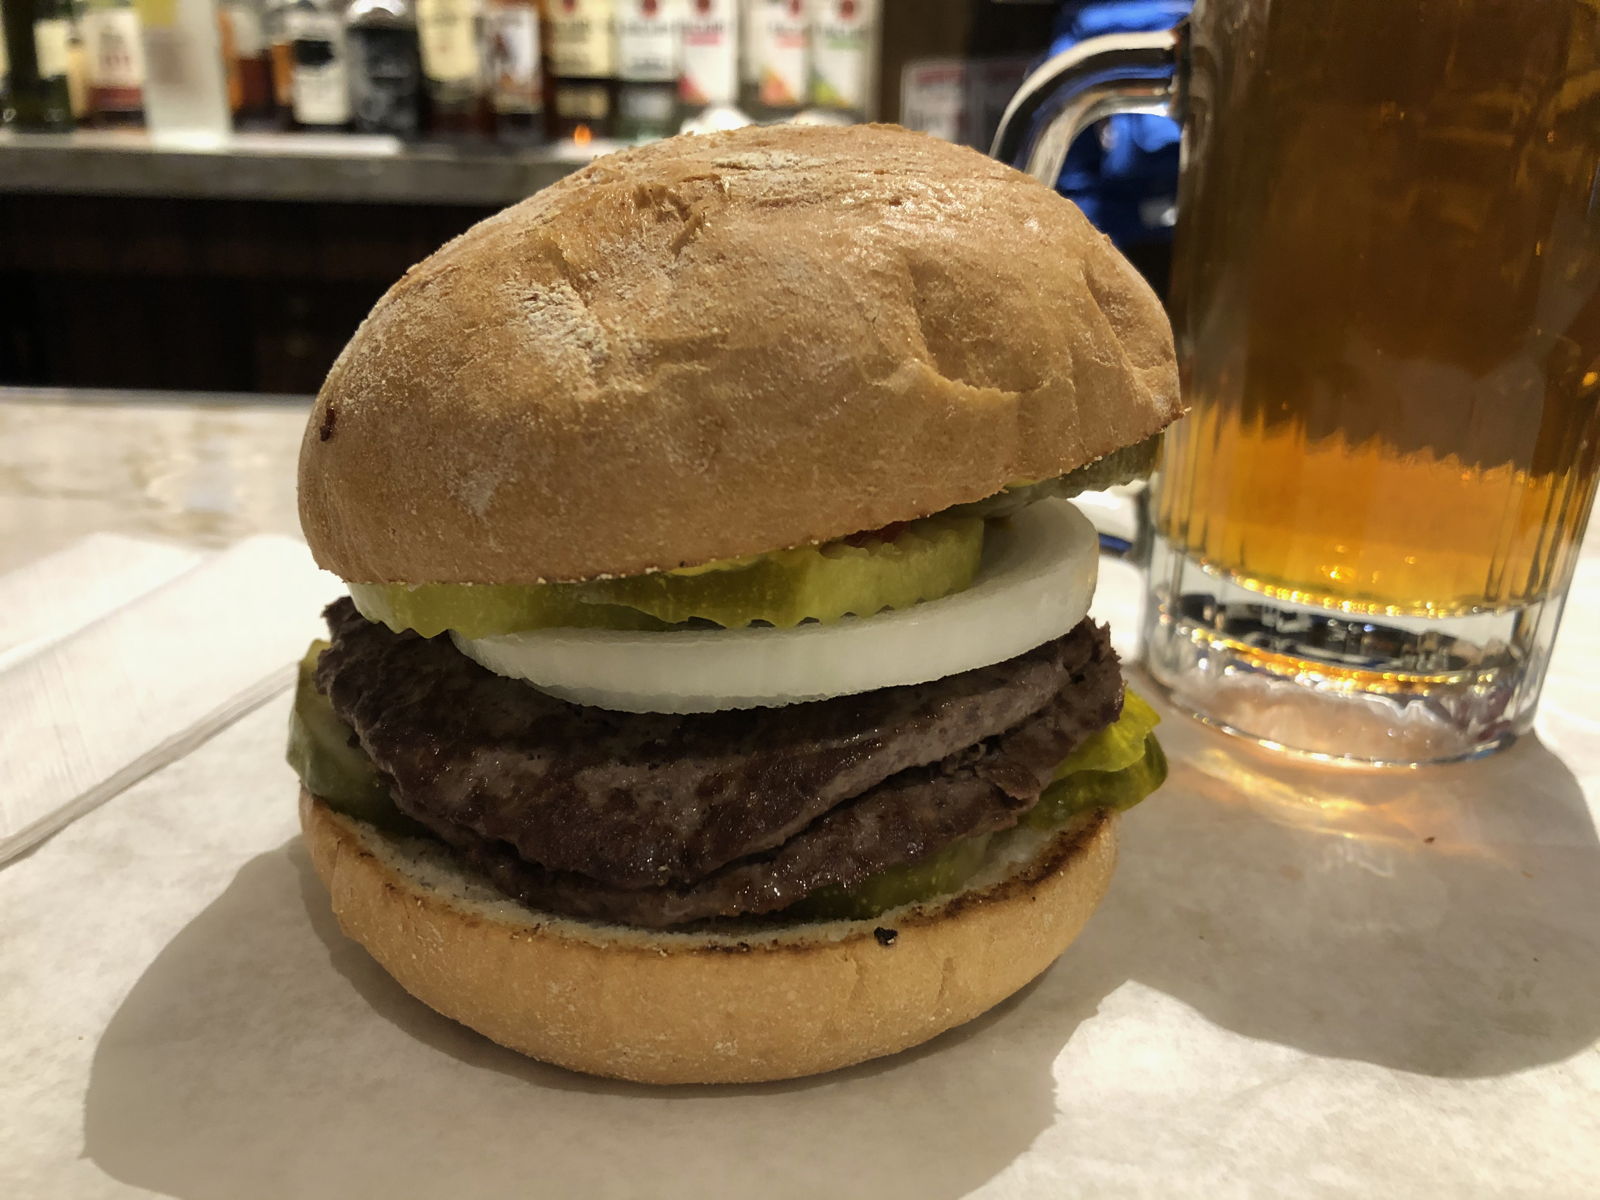 Billy Goat Tavern burger: Handmade burger from the Original Billy Goat in Chicago.; hamburger; ground beef; Chicago; The Billy Goat Tavern